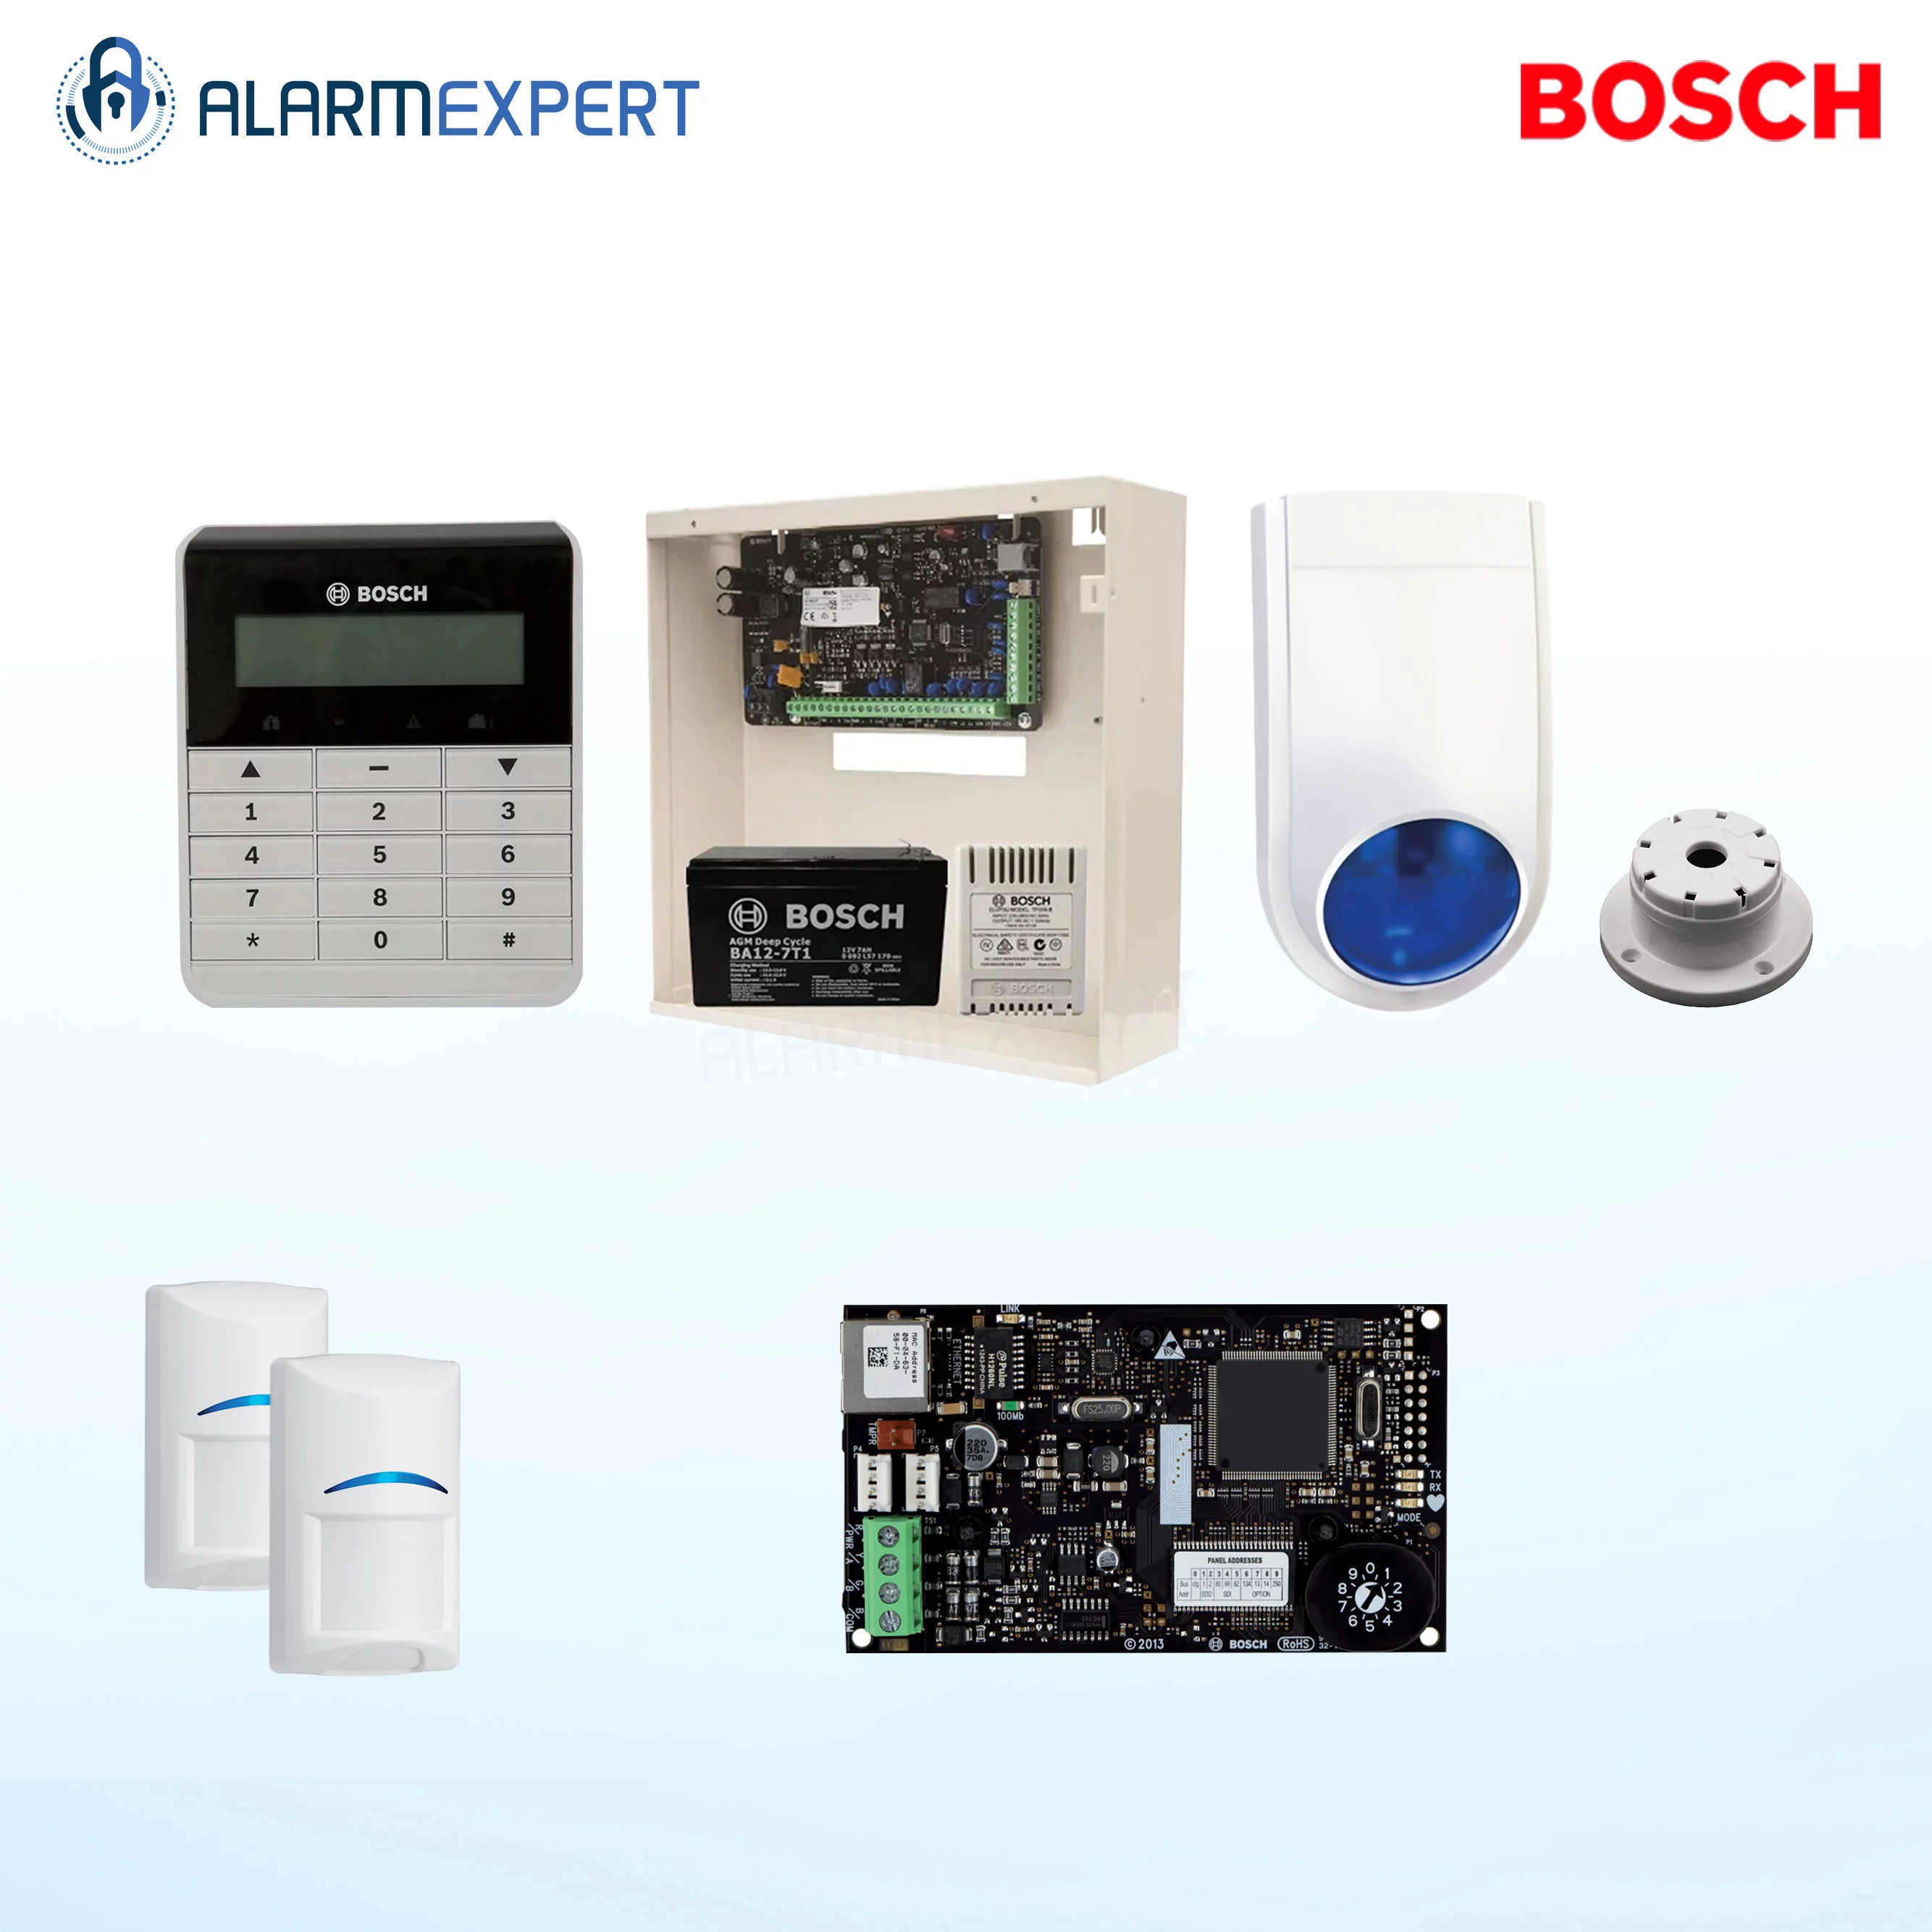 Bosch Solution 2000 IP + 2 QUADs + Text Keypad